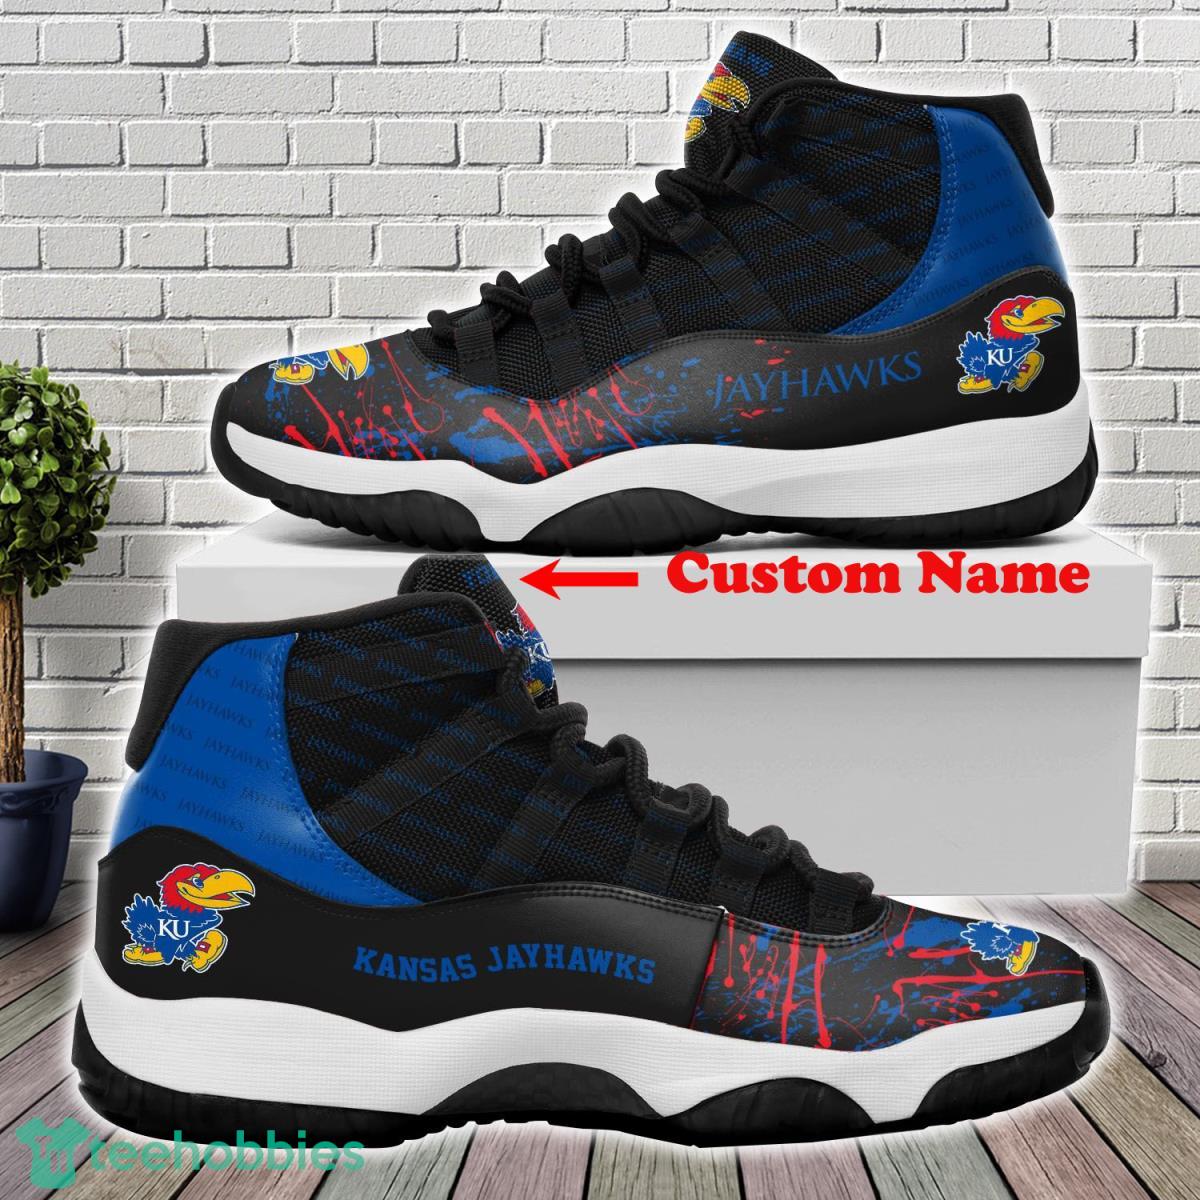 Kansas Jayhawks Football Team Air Jordan 11 Custom Name Sneakers For Fans Product Photo 1